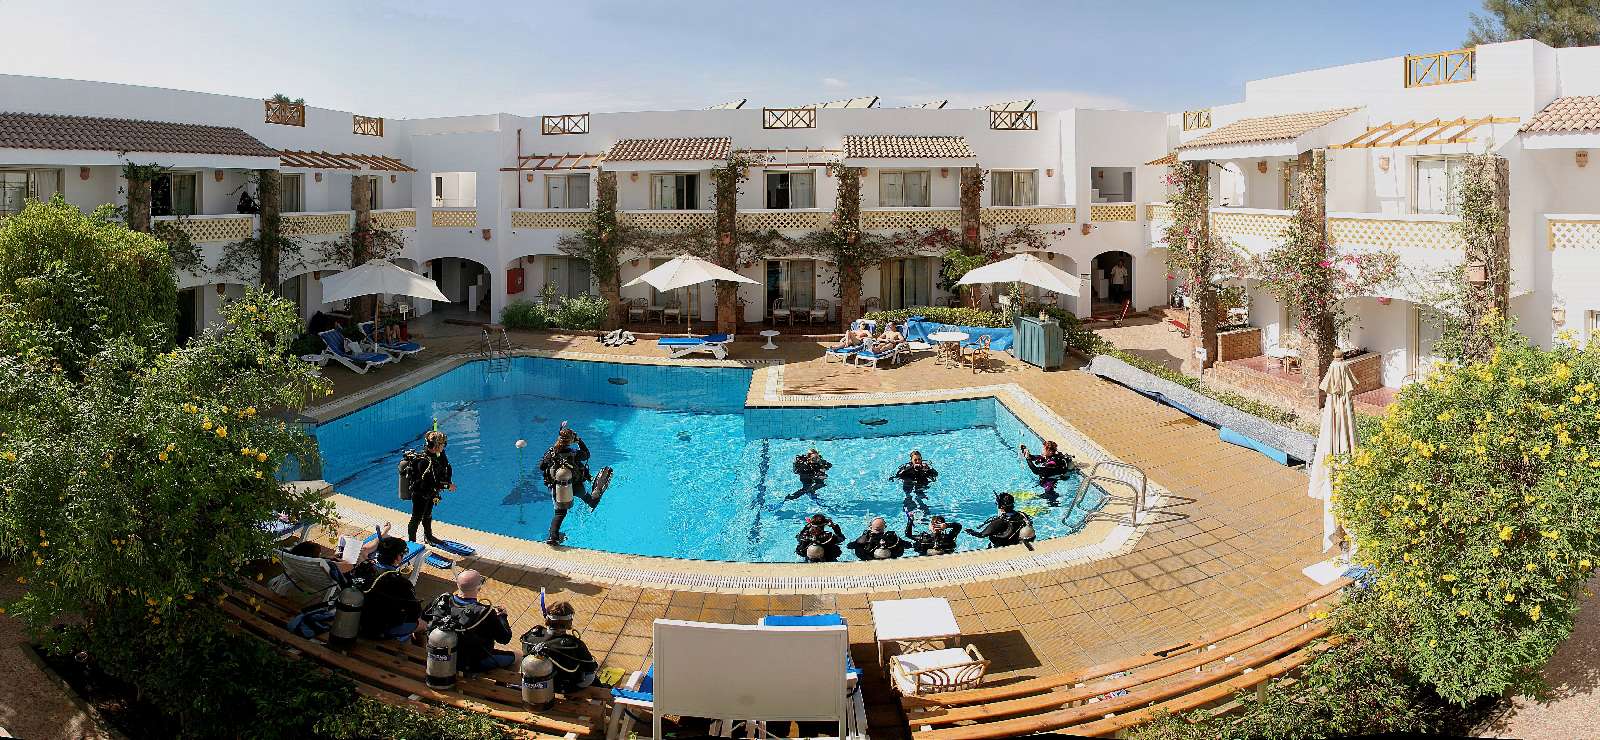 camel-hotel-pool.jpg